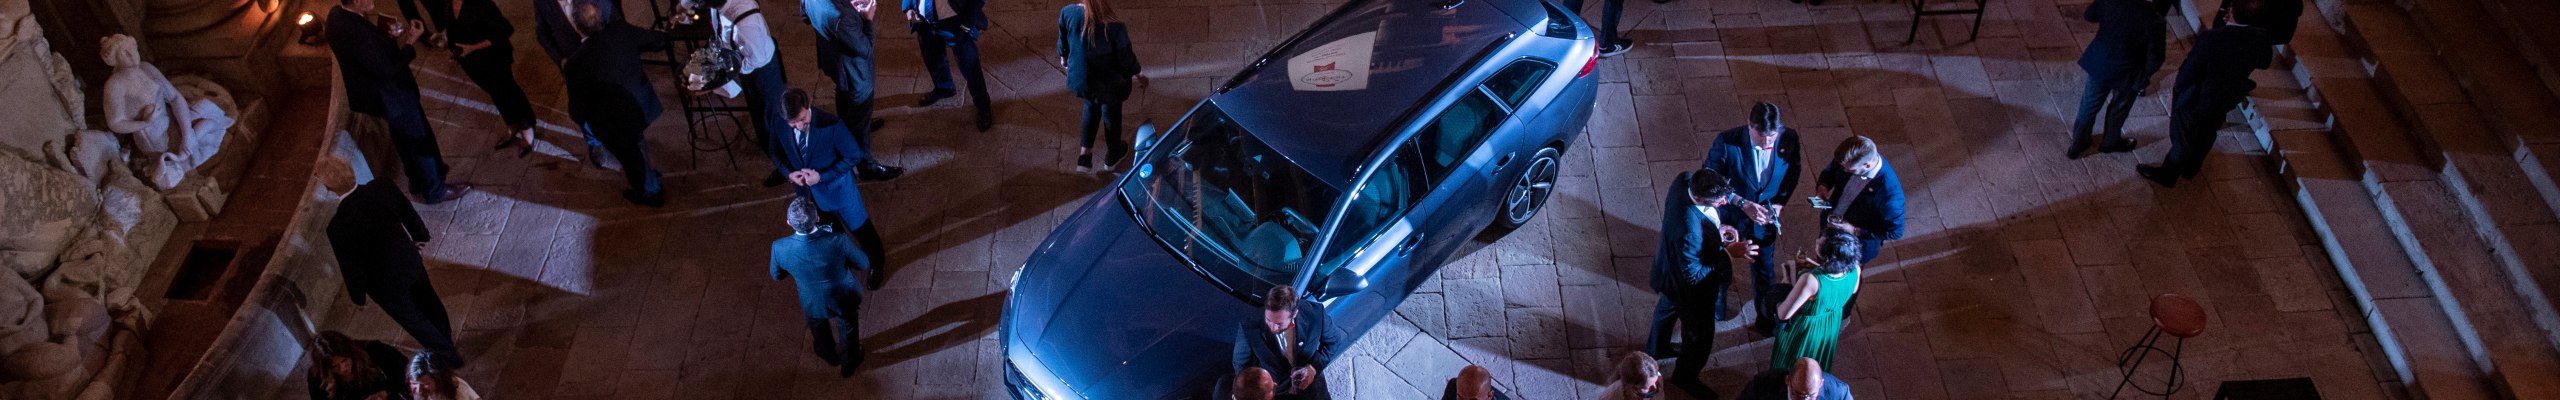 SEAT Leon riceve il premio “Best Buy Car Europa 2021” nel Gala AUTOBEST 